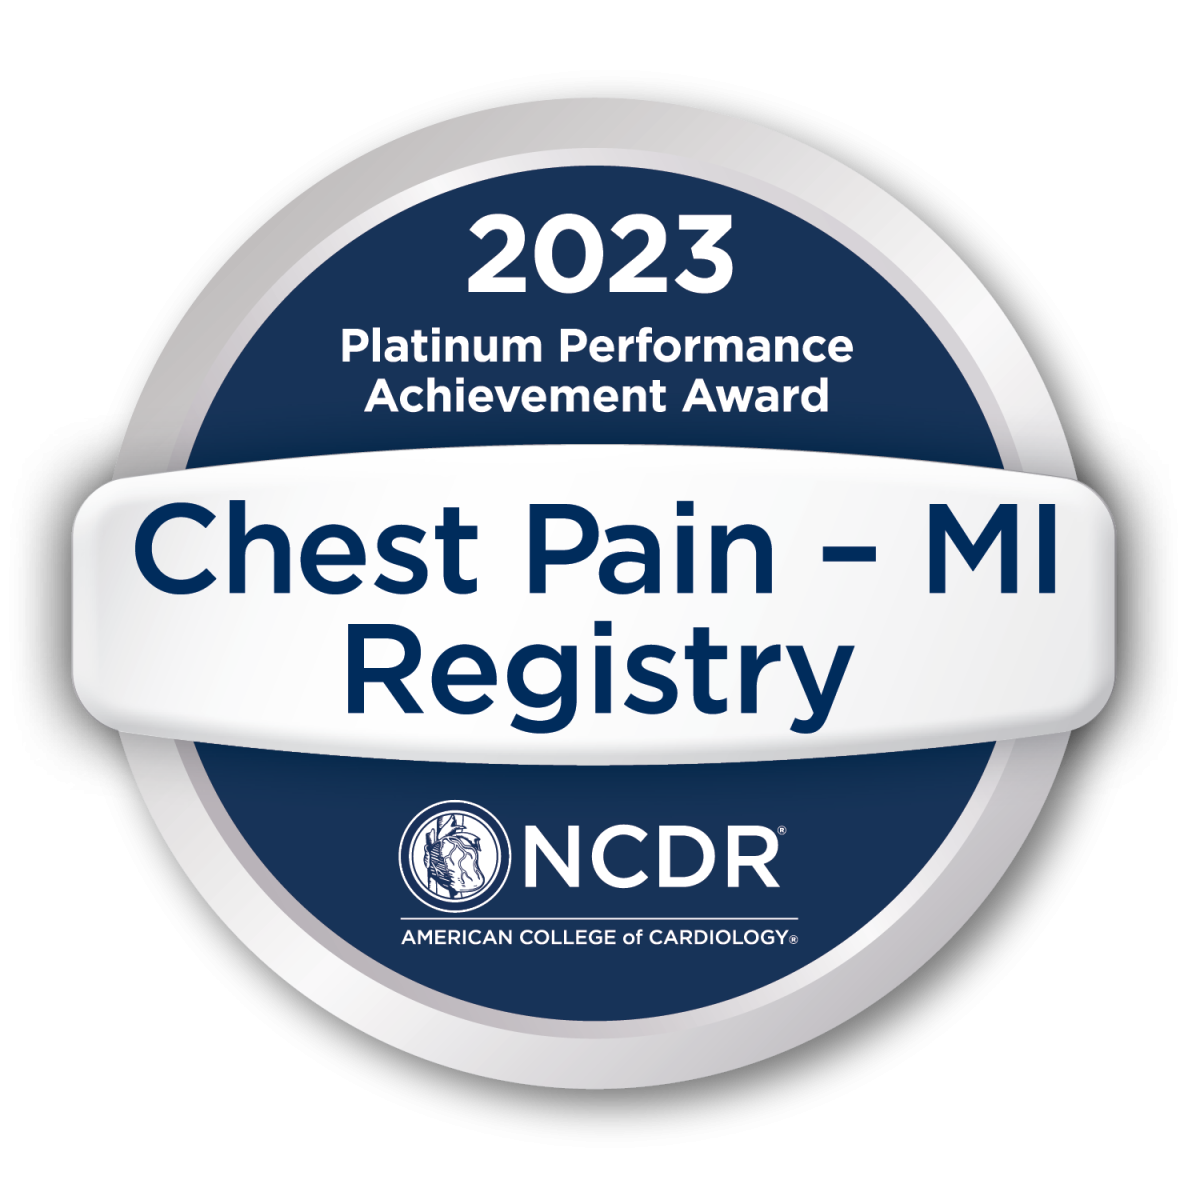 Chest Pain - MI Registry NCDR 2023